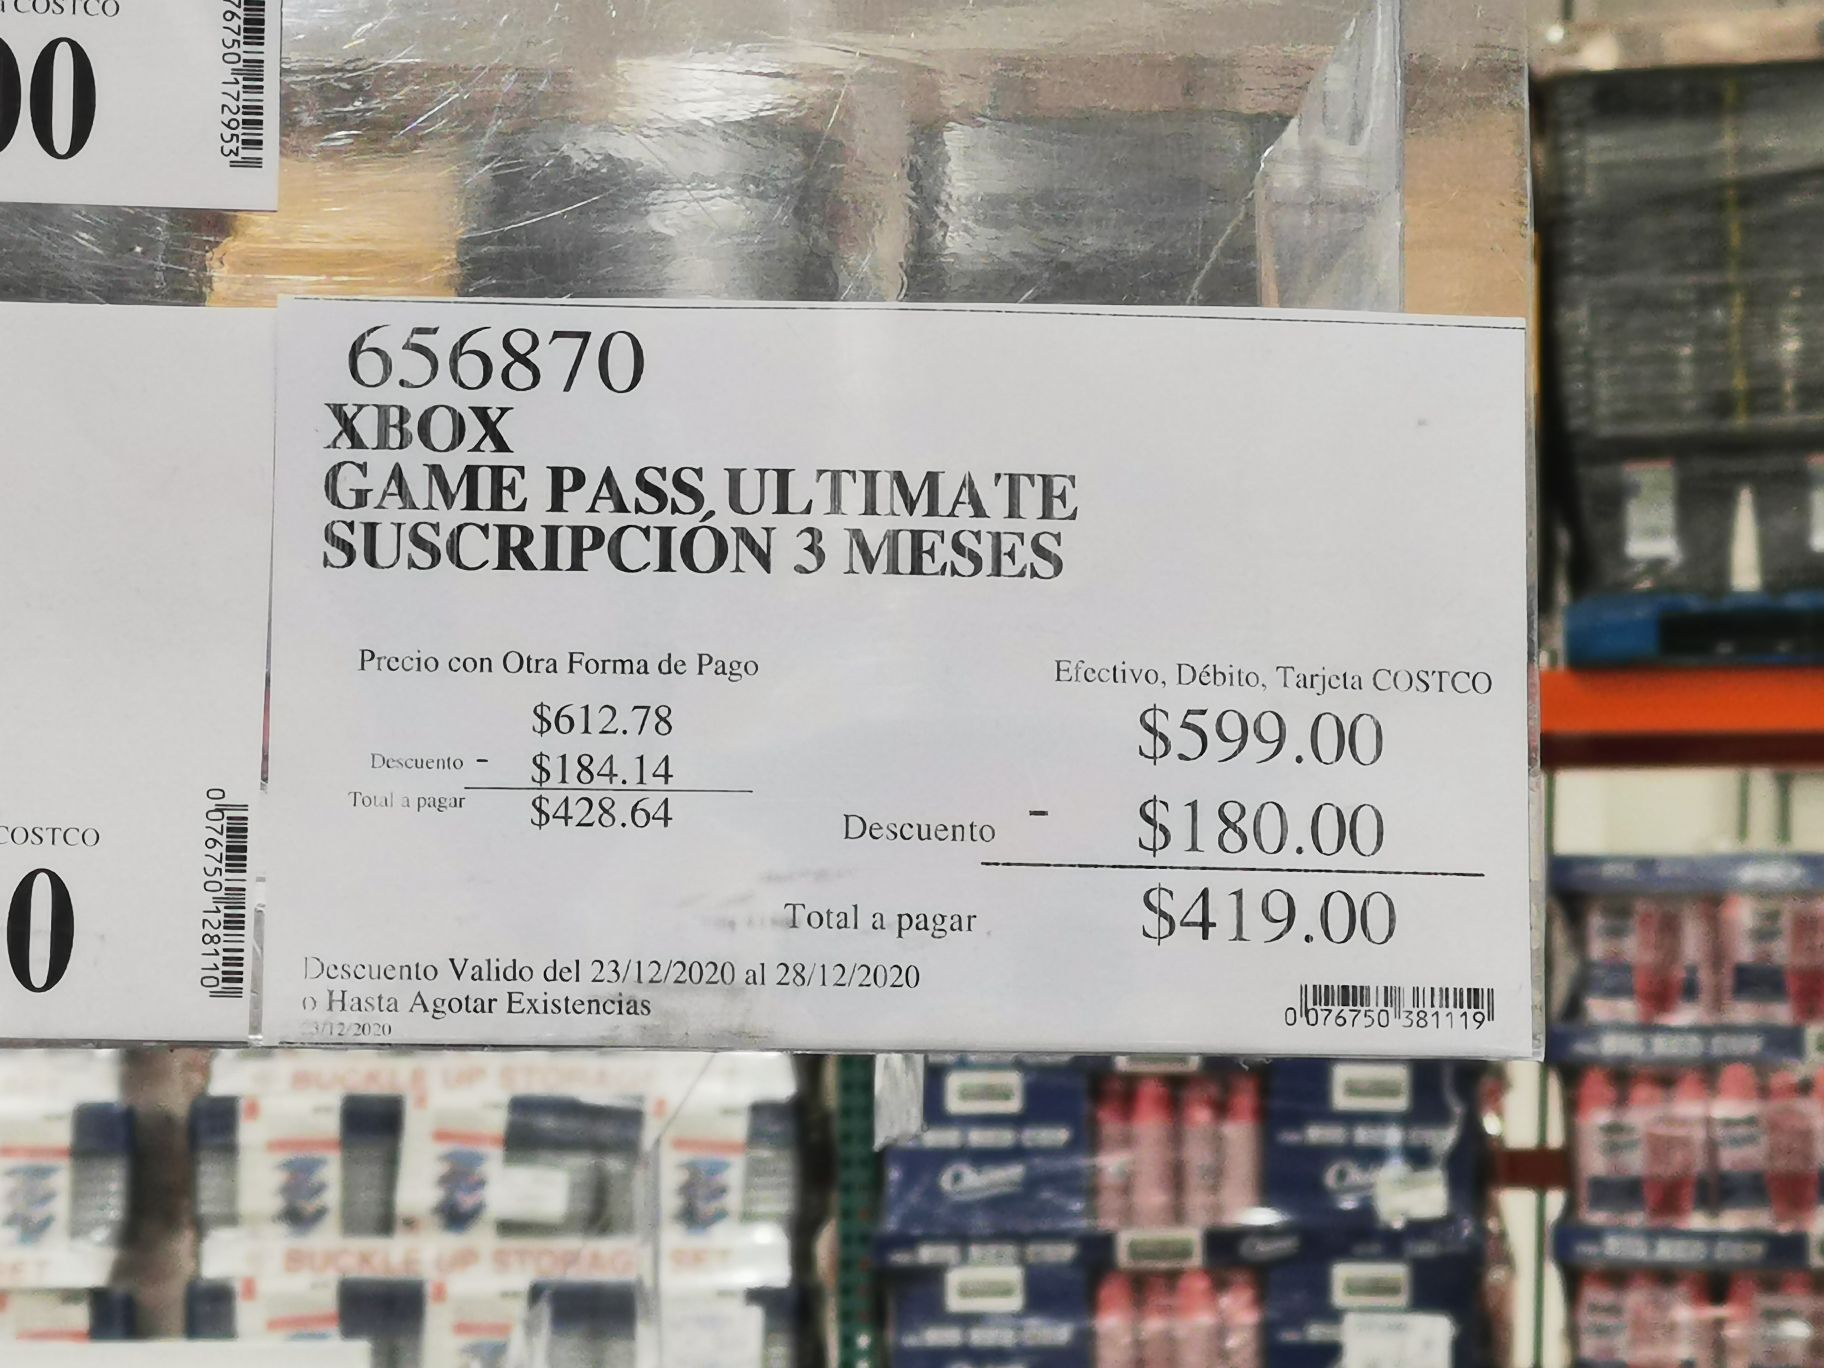 costco xbox game pass ultimate